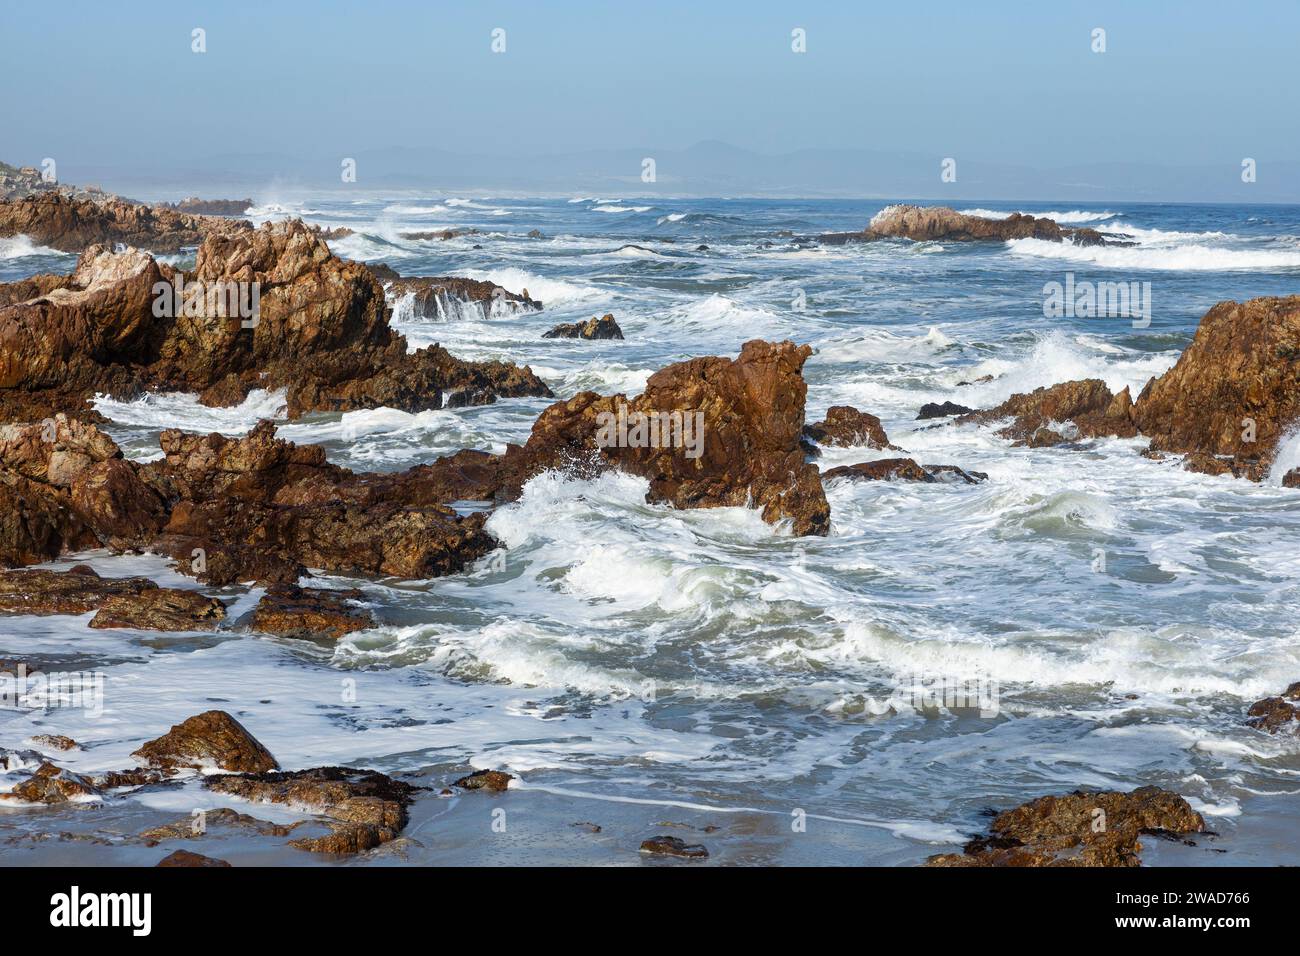 South Africa, Hermanus, Rocky coastline and sea at Kammabaai Beach Stock Photo